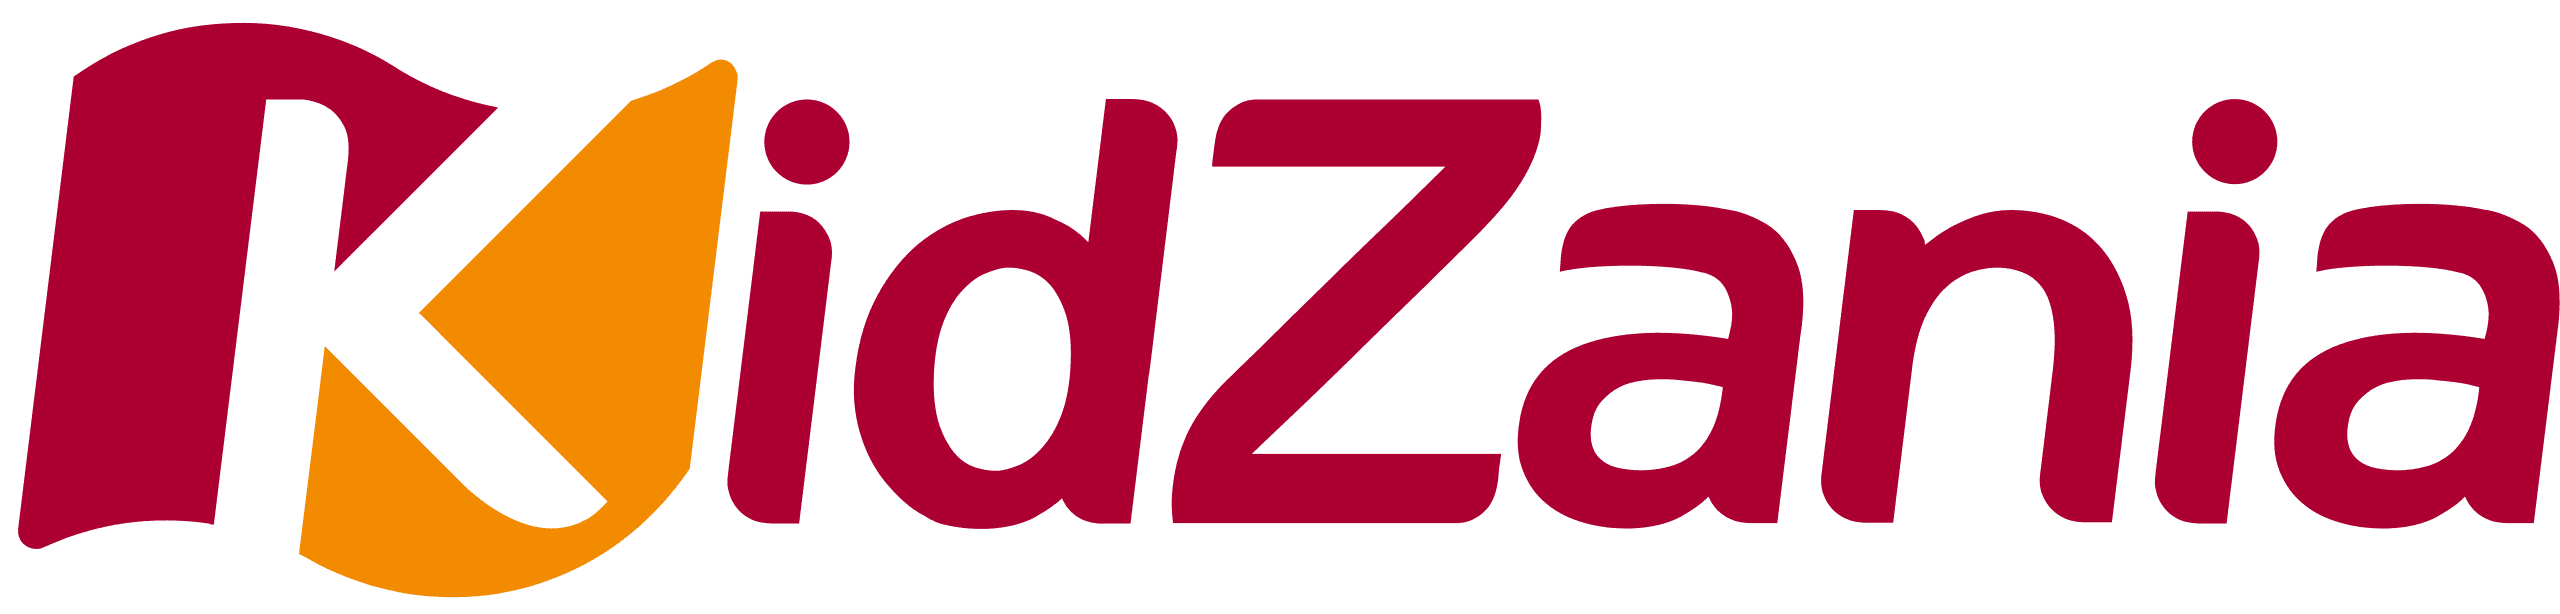 logo-image-1-https://ail6eez1.qidz.com/wp-content/uploads/2021/12/kidzania-logo.png